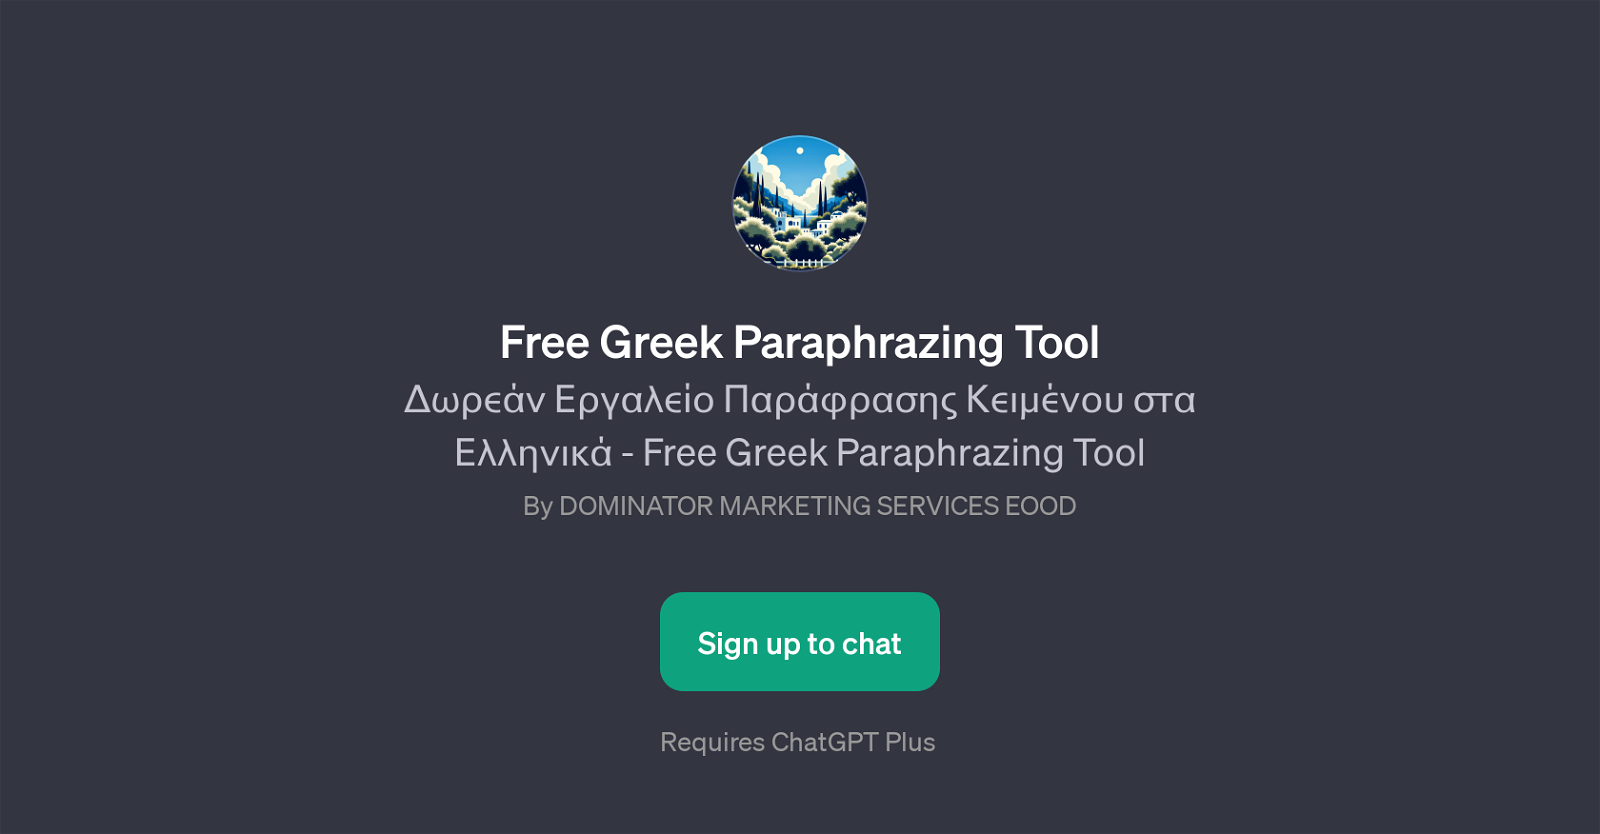 Free Greek Paraphrasing Tool website